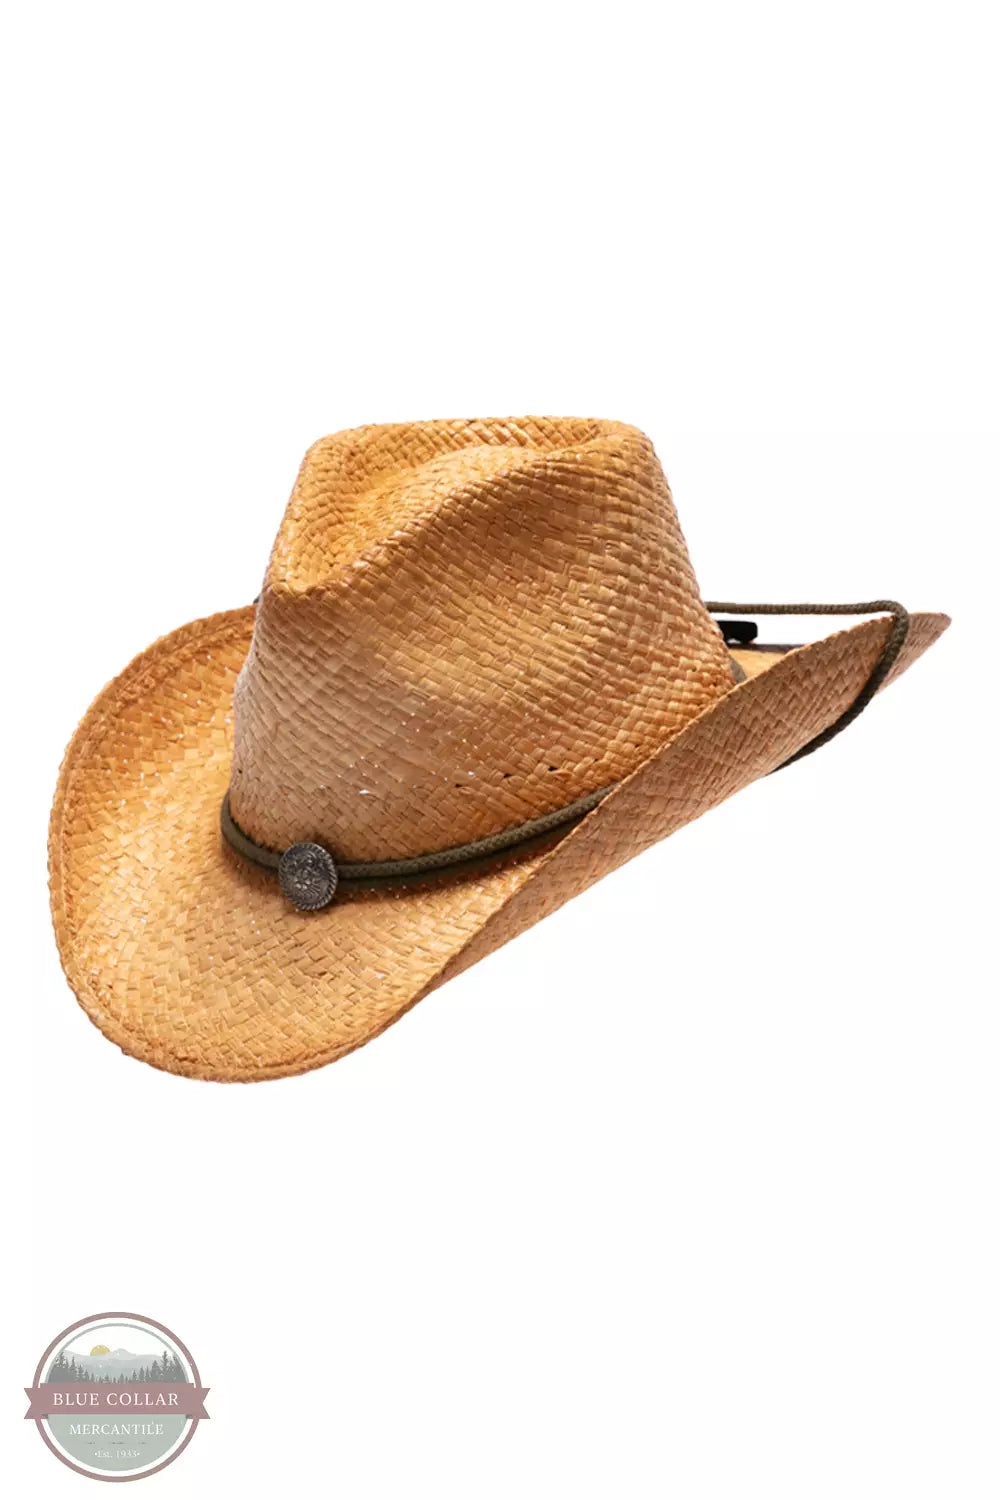 Henschel Hat Company 3203 Tuscola Hiker Straw Hat Profile View